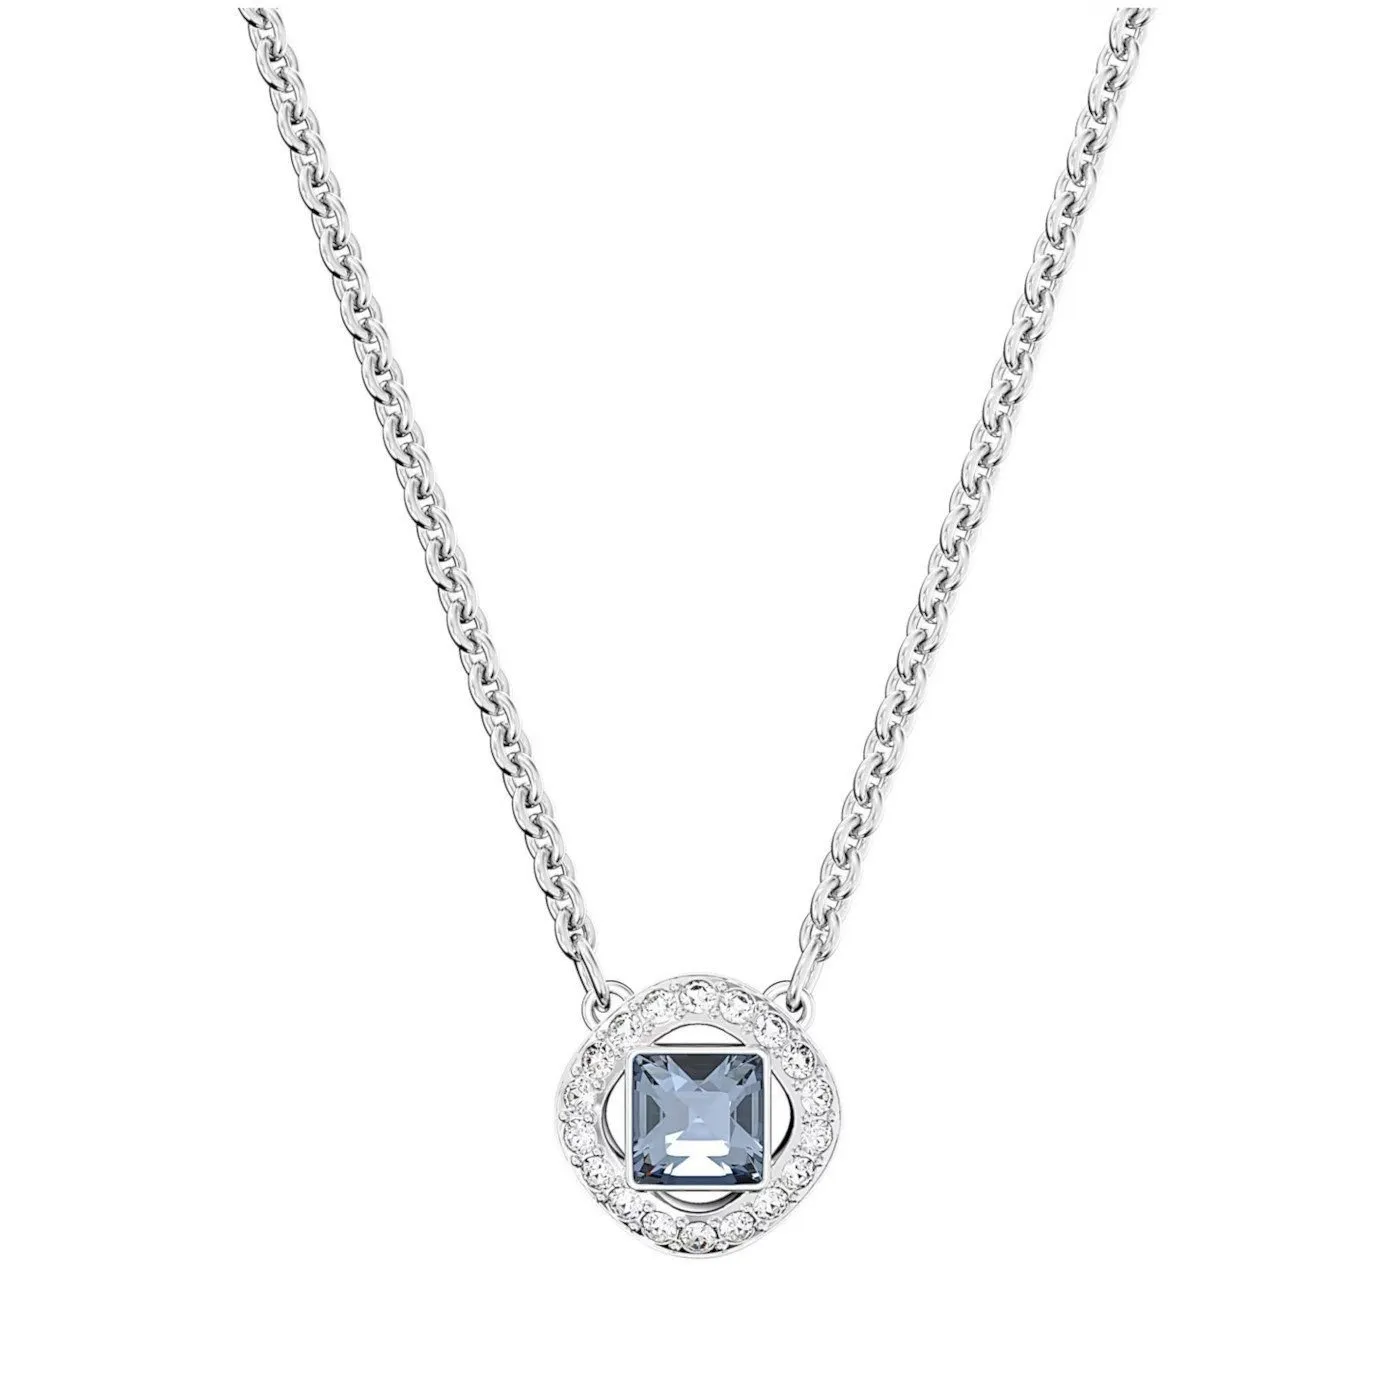 Dây chuyền Swarovski Angelic đá vuông - Swarovski Angelic necklace Square cut, Blue, Rhodium plated